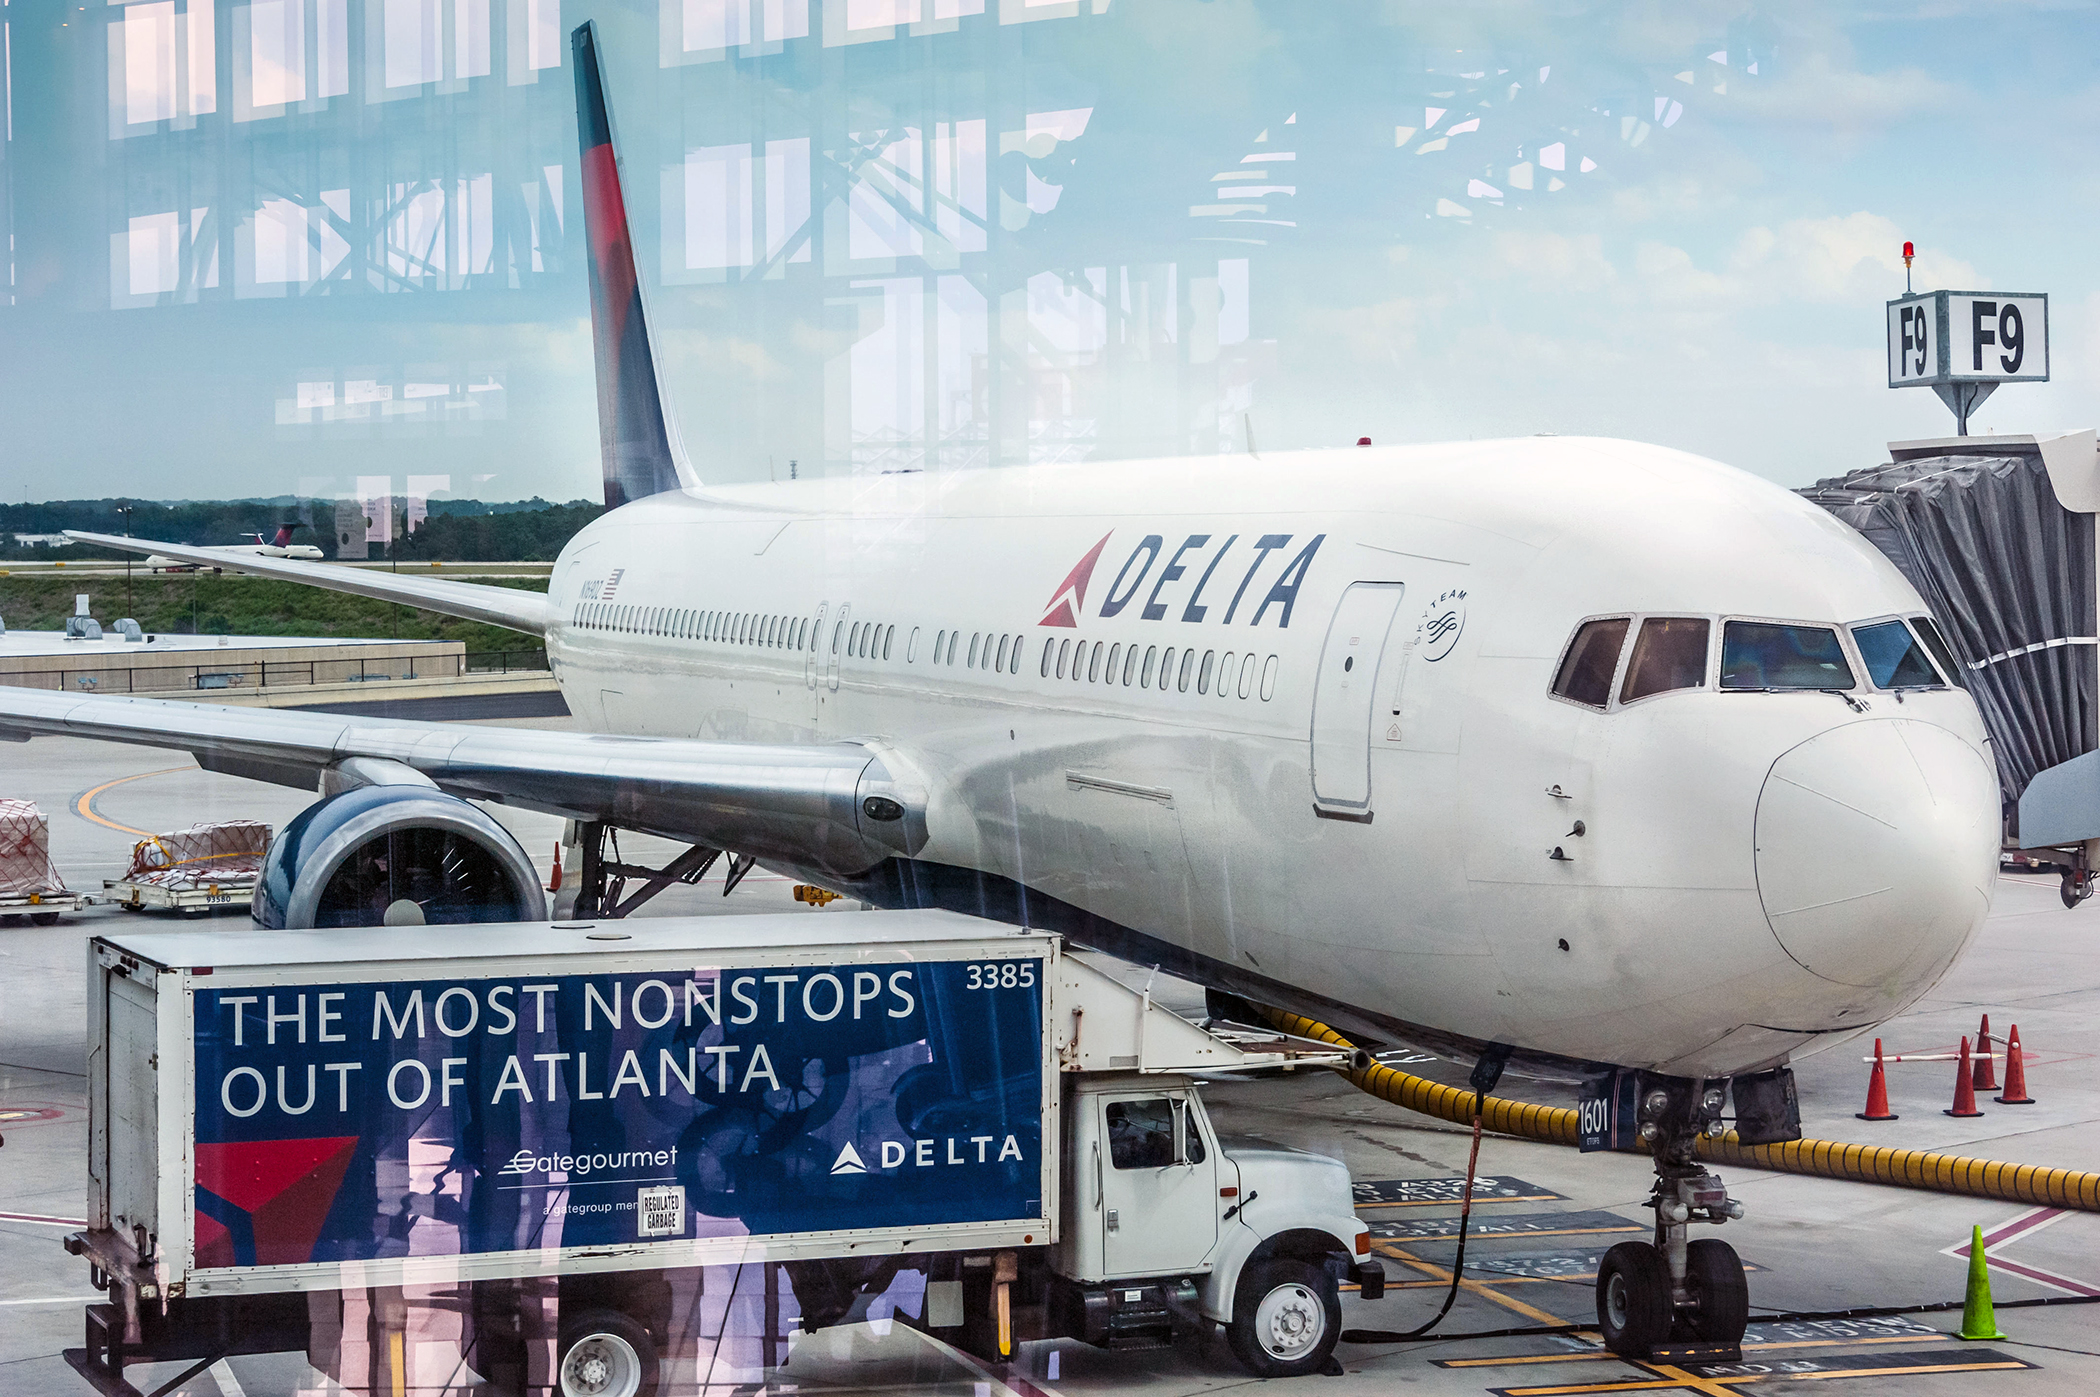 Delta Airlines passenger jet and service truck at Atlanta International Airport in Atlanta, Georgia, 2014.